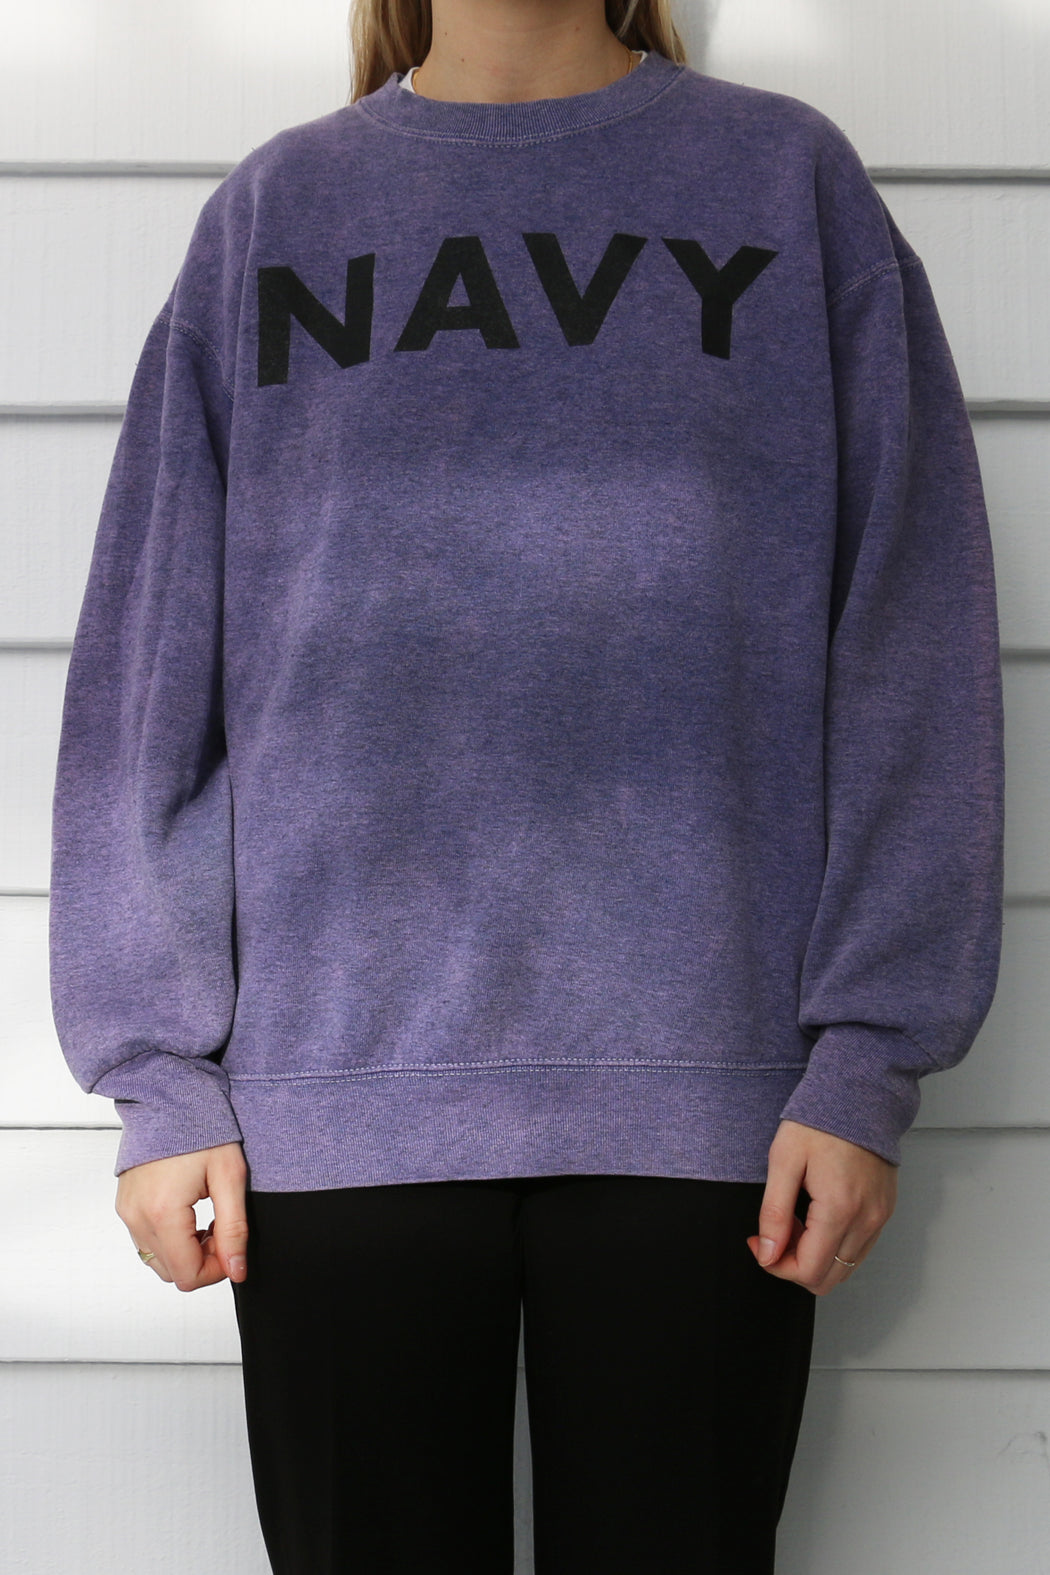 vintage navy sweatshirt